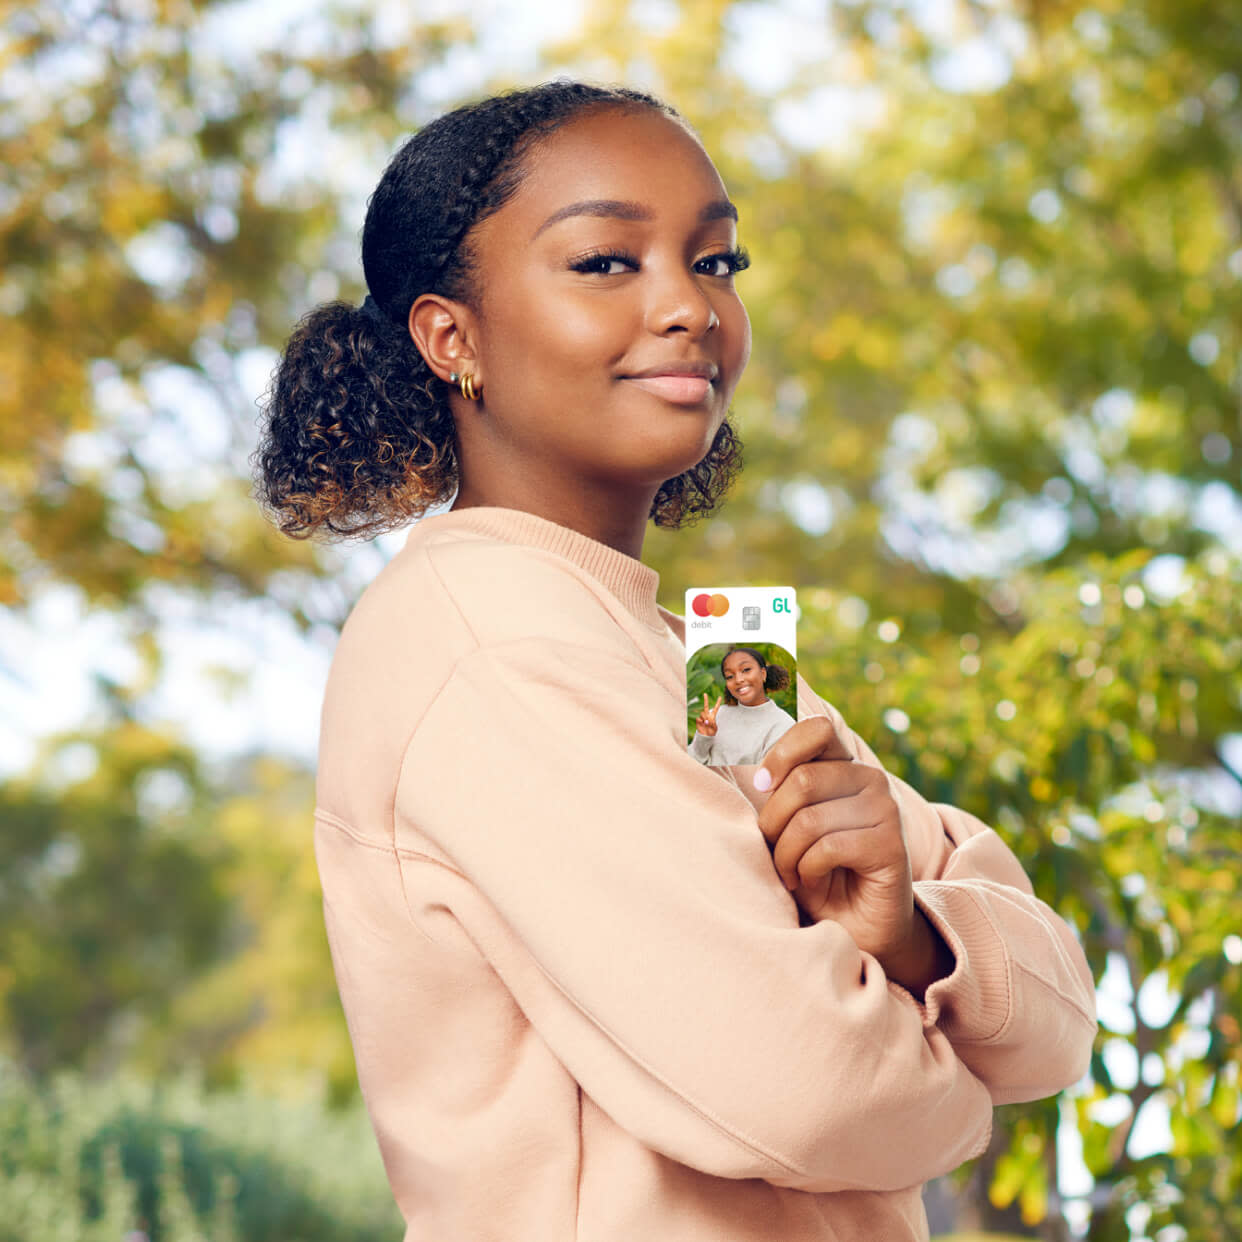 teen girl holding a custom greenlight debit card